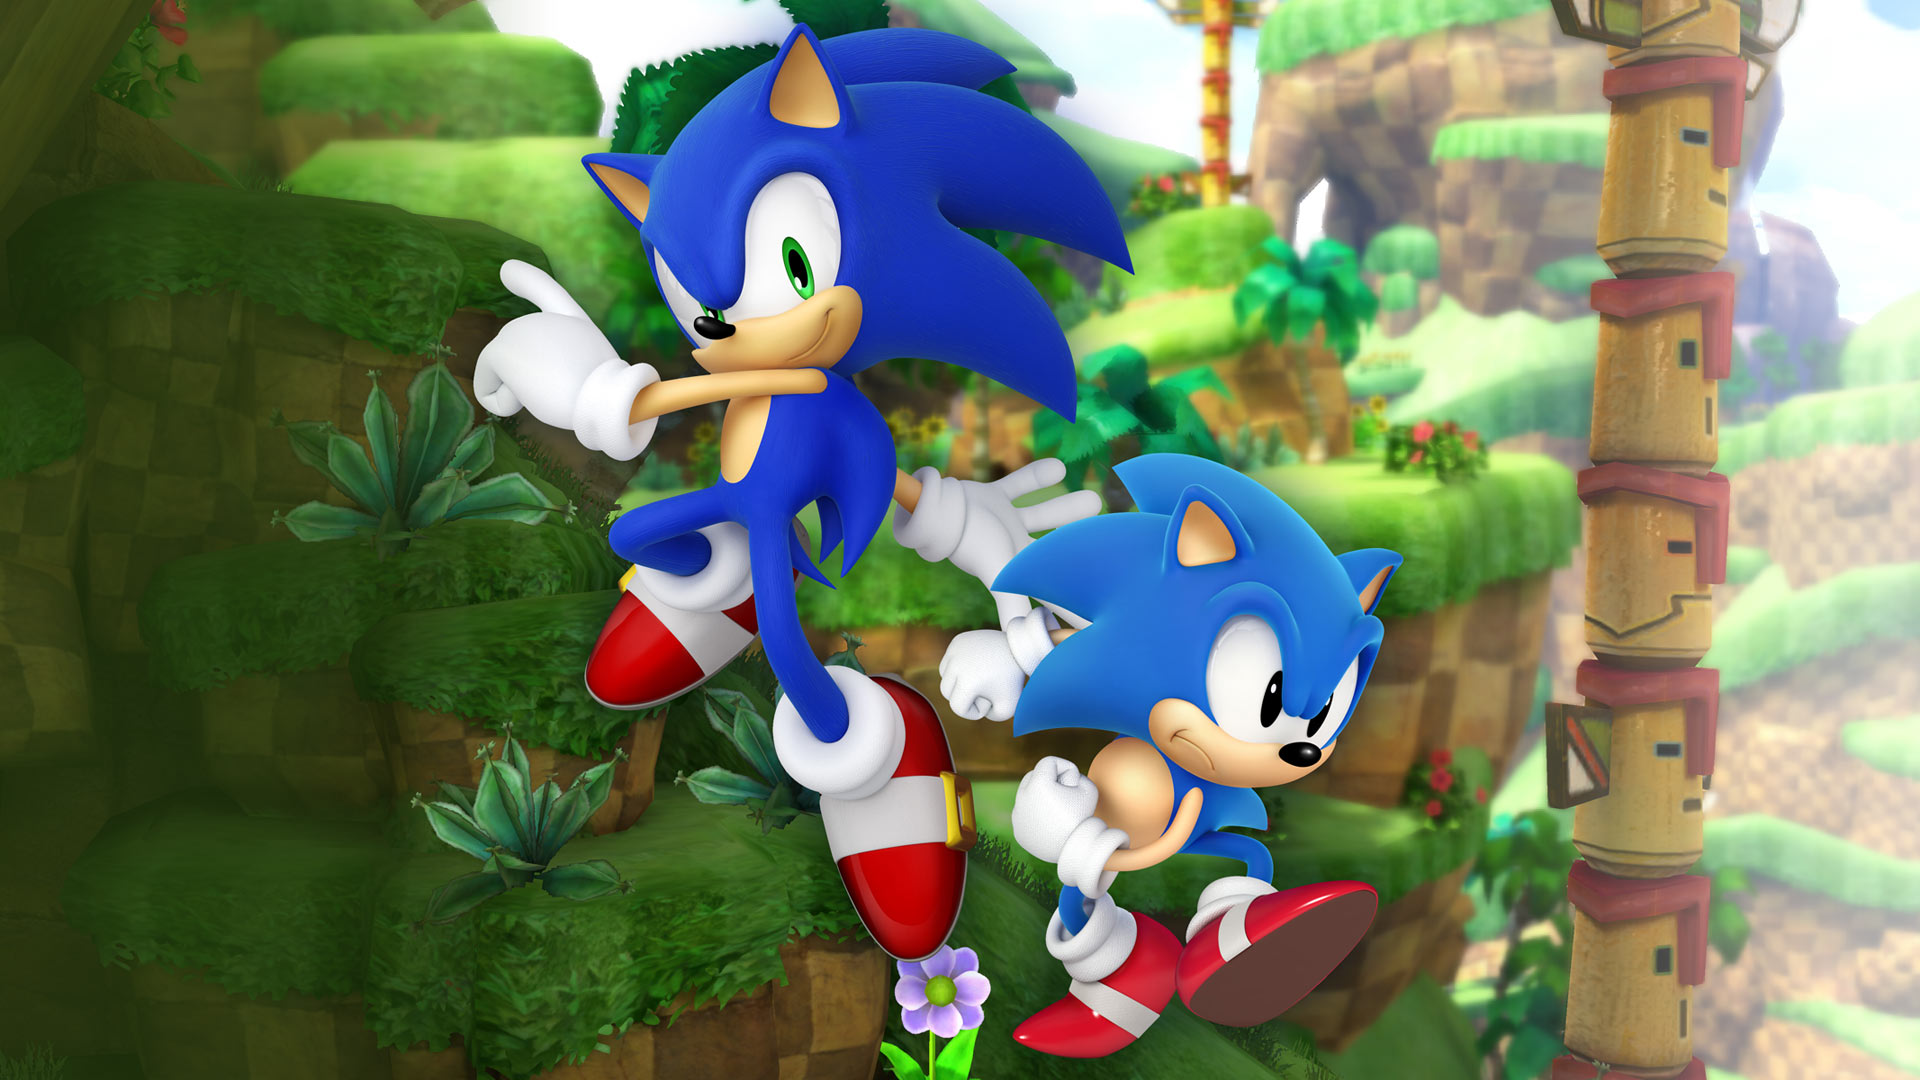 Sonic Generations HD Wallpaper